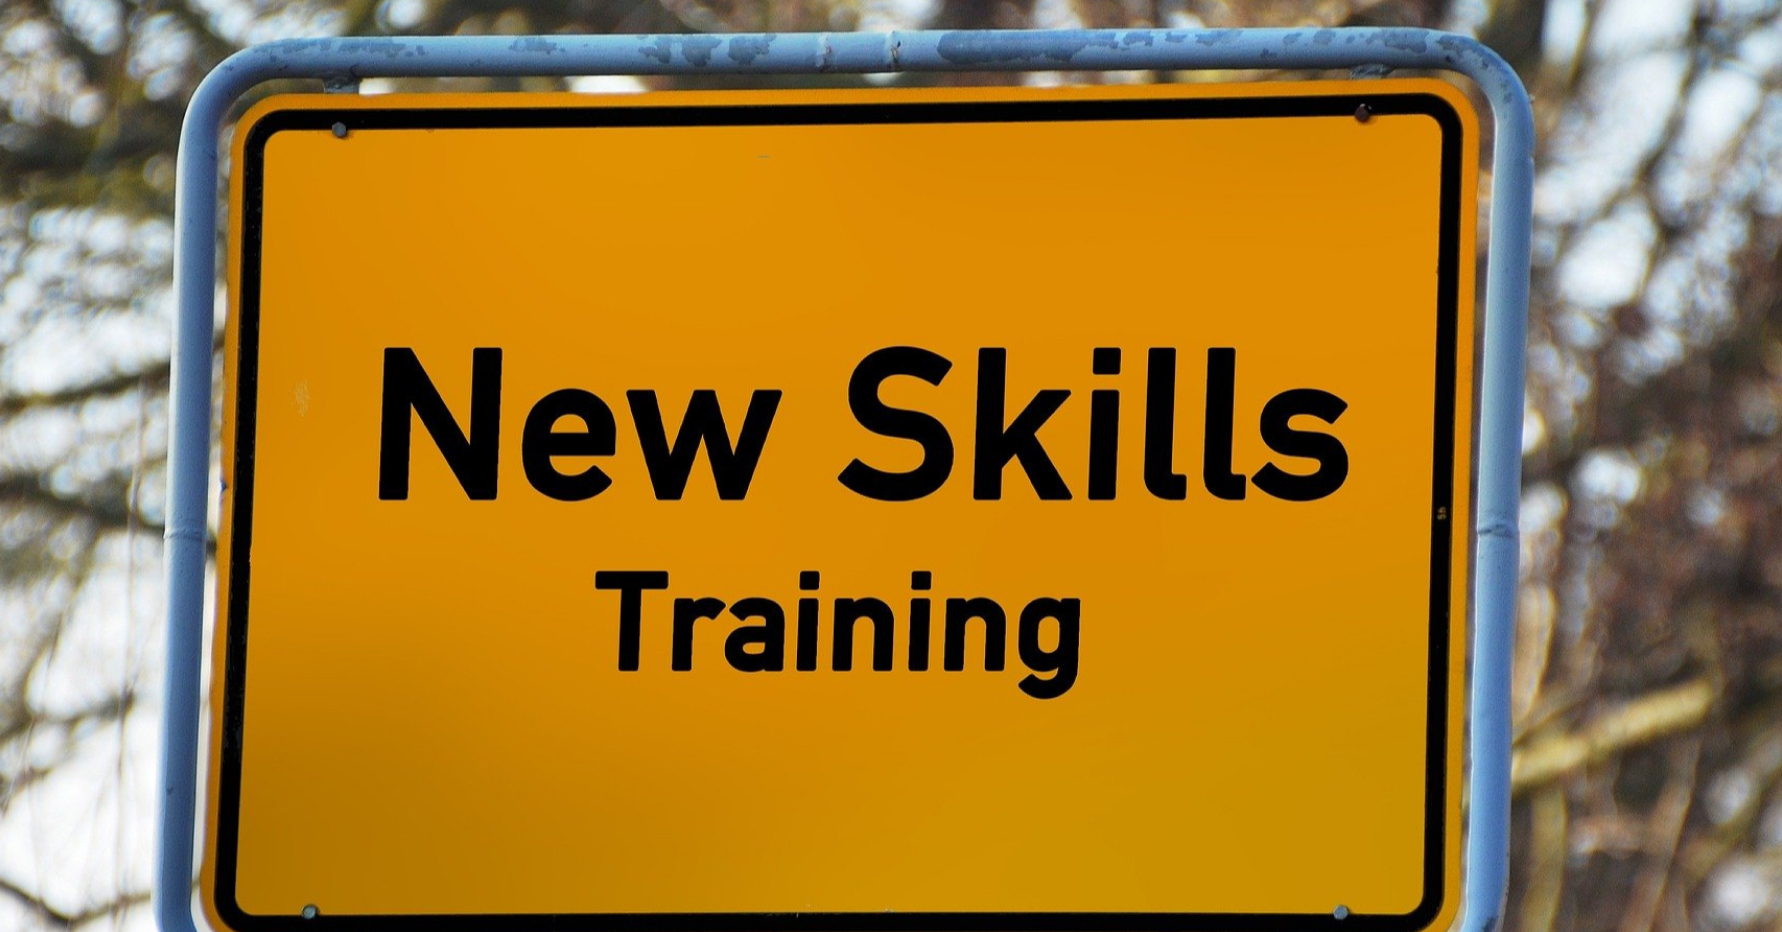 New Skill Training sign